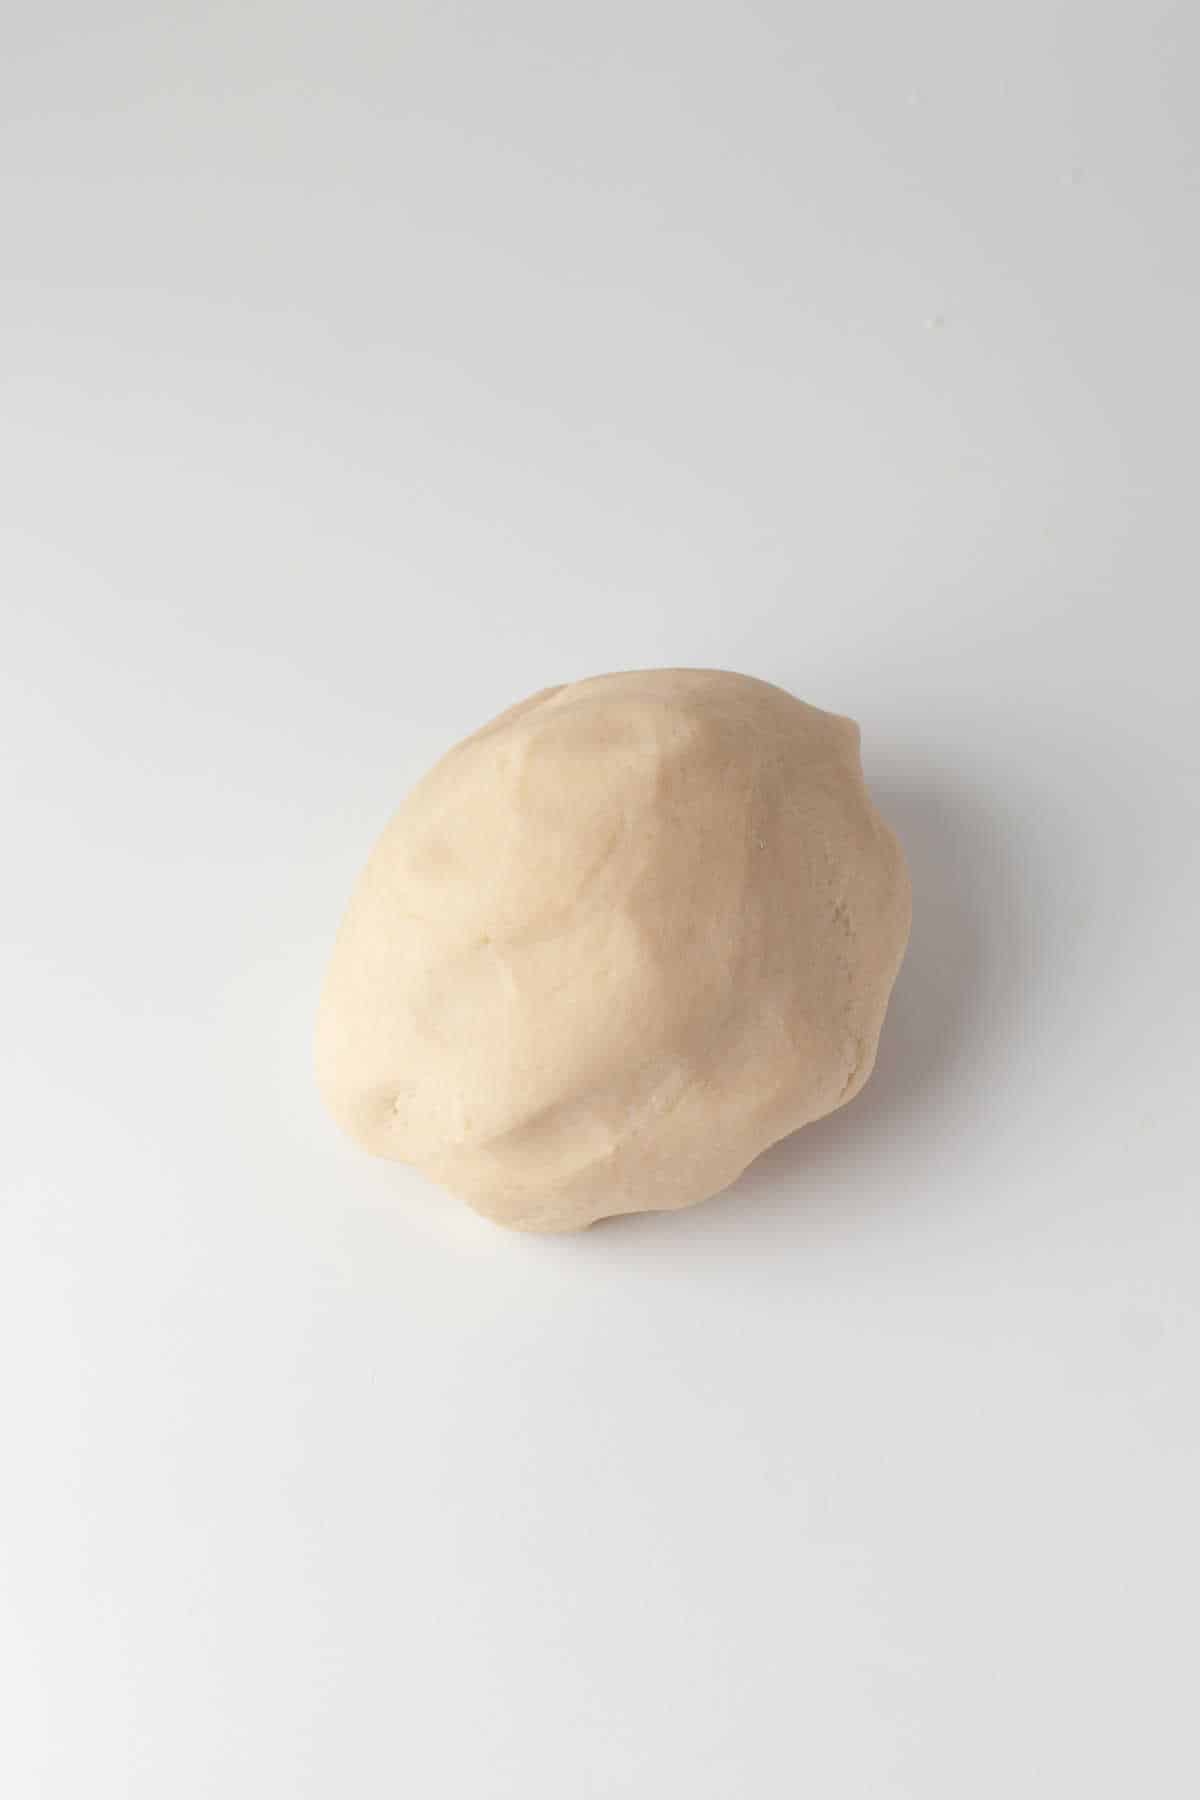 A ball of pie dough. 